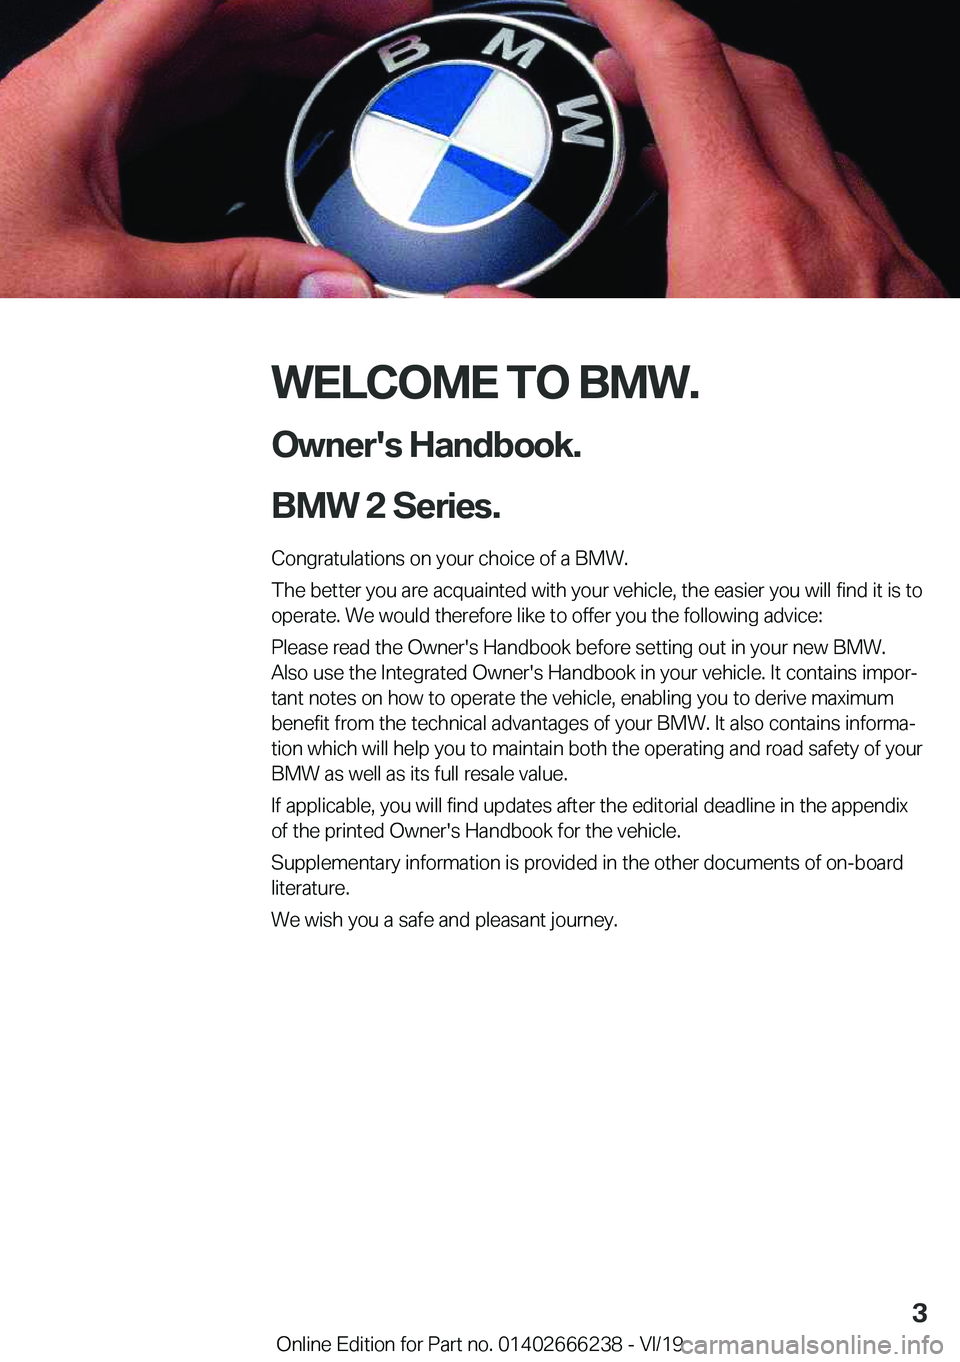 BMW 2 SERIES COUPE 2020  Owners Manual �W�E�L�C�O�M�E��T�O��B�M�W�.�O�w�n�e�r�'�s��H�a�n�d�b�o�o�k�.
�B�M�W��2��S�e�r�i�e�s�.�
�C�o�n�g�r�a�t�u�l�a�t�i�o�n�s��o�n��y�o�u�r��c�h�o�i�c�e��o�f��a��B�M�W�.
�T�h�e��b�e�t�t�e�r�